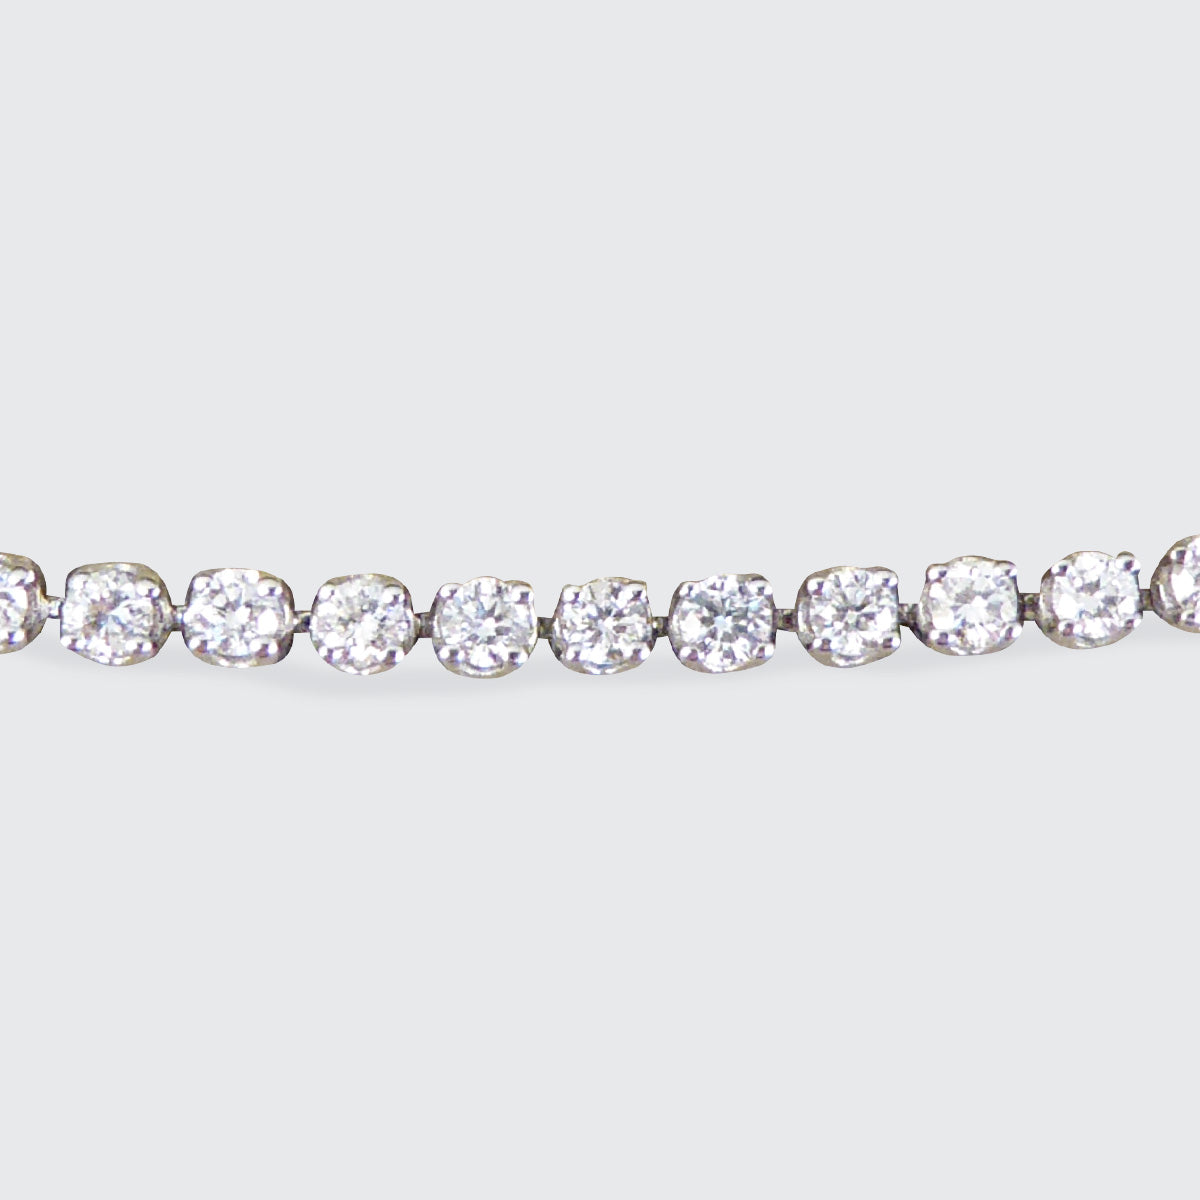 Brilliant Cut Diamond 3.00ct Flexi-link Tennis Bracelet in 18ct White Gold